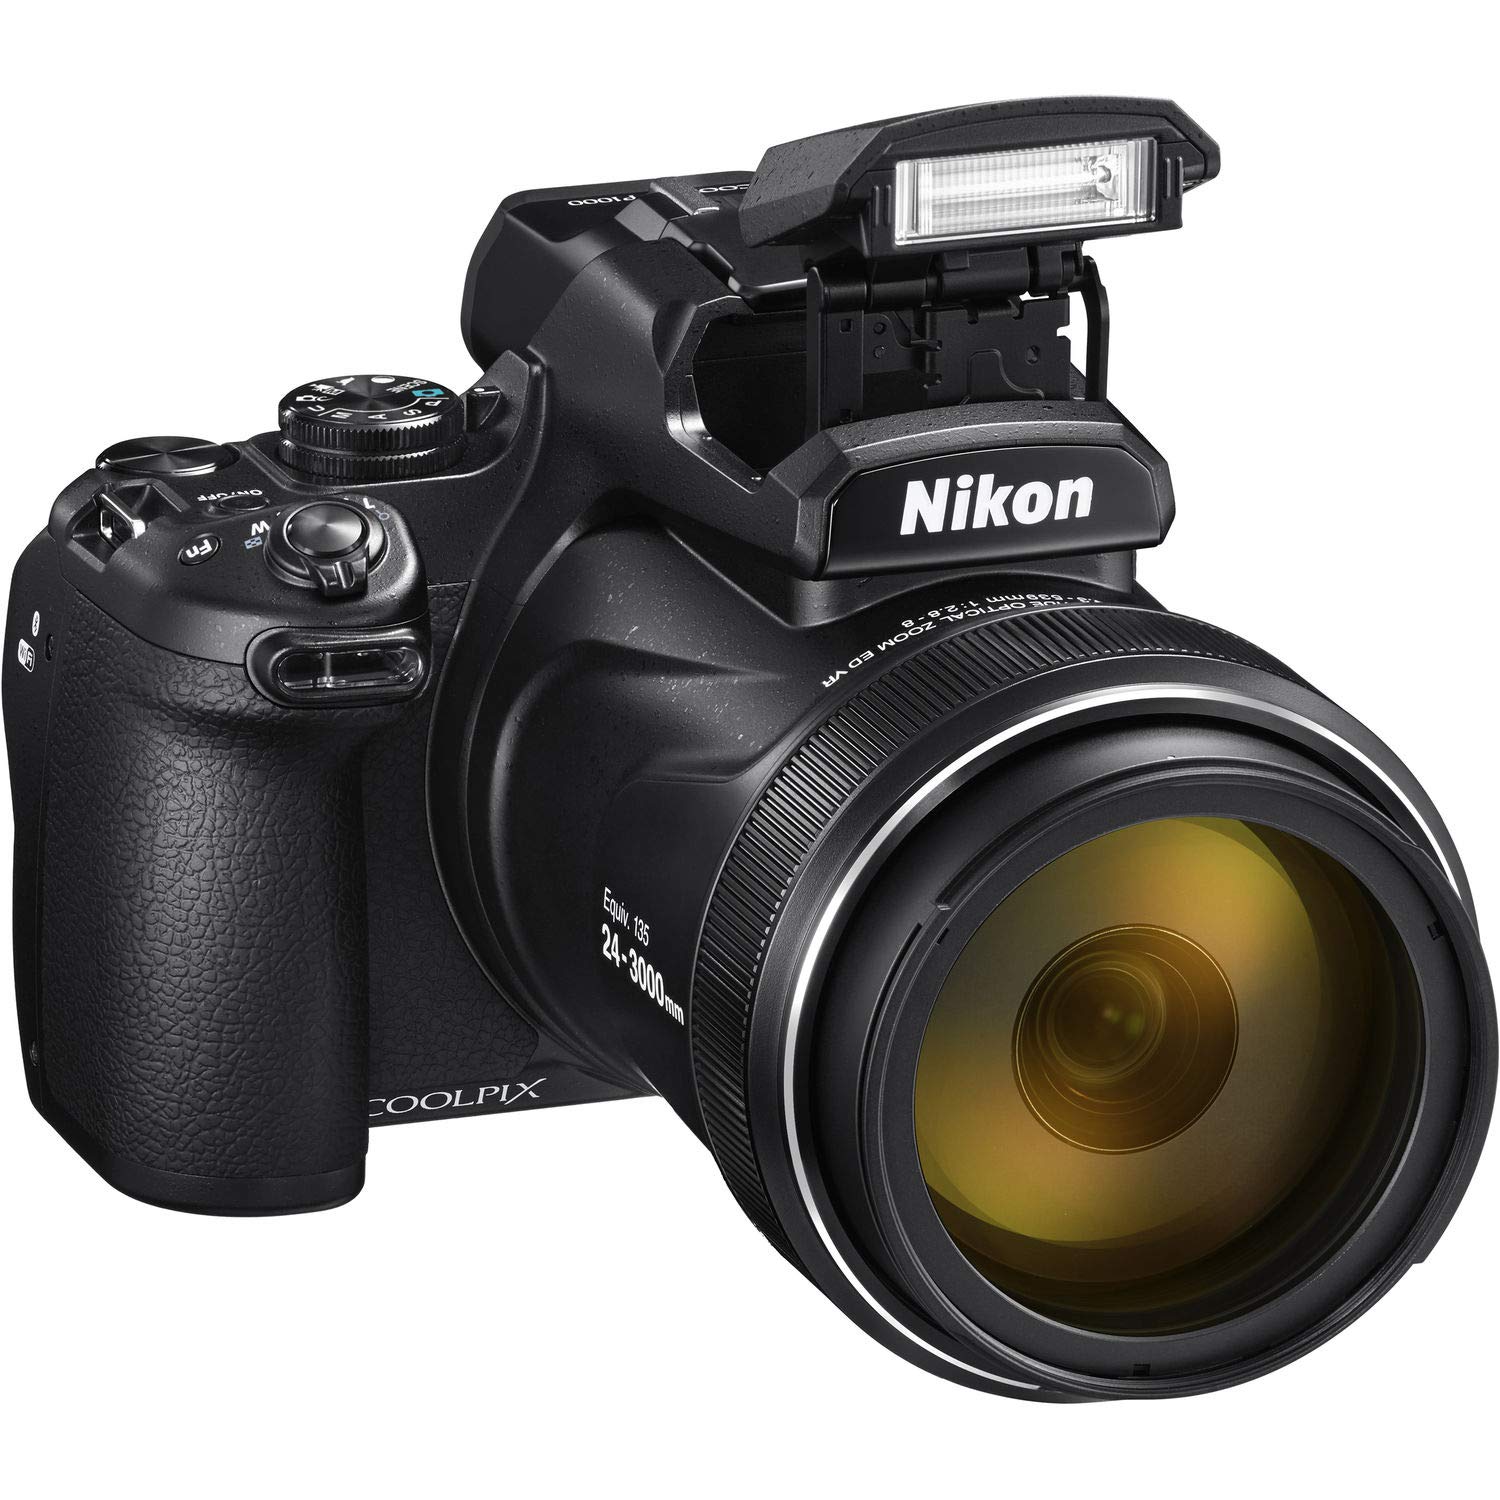 Nikon COOLPIX P1000 Digital Camera + 128GB Memory Card Professional Bundle International Model